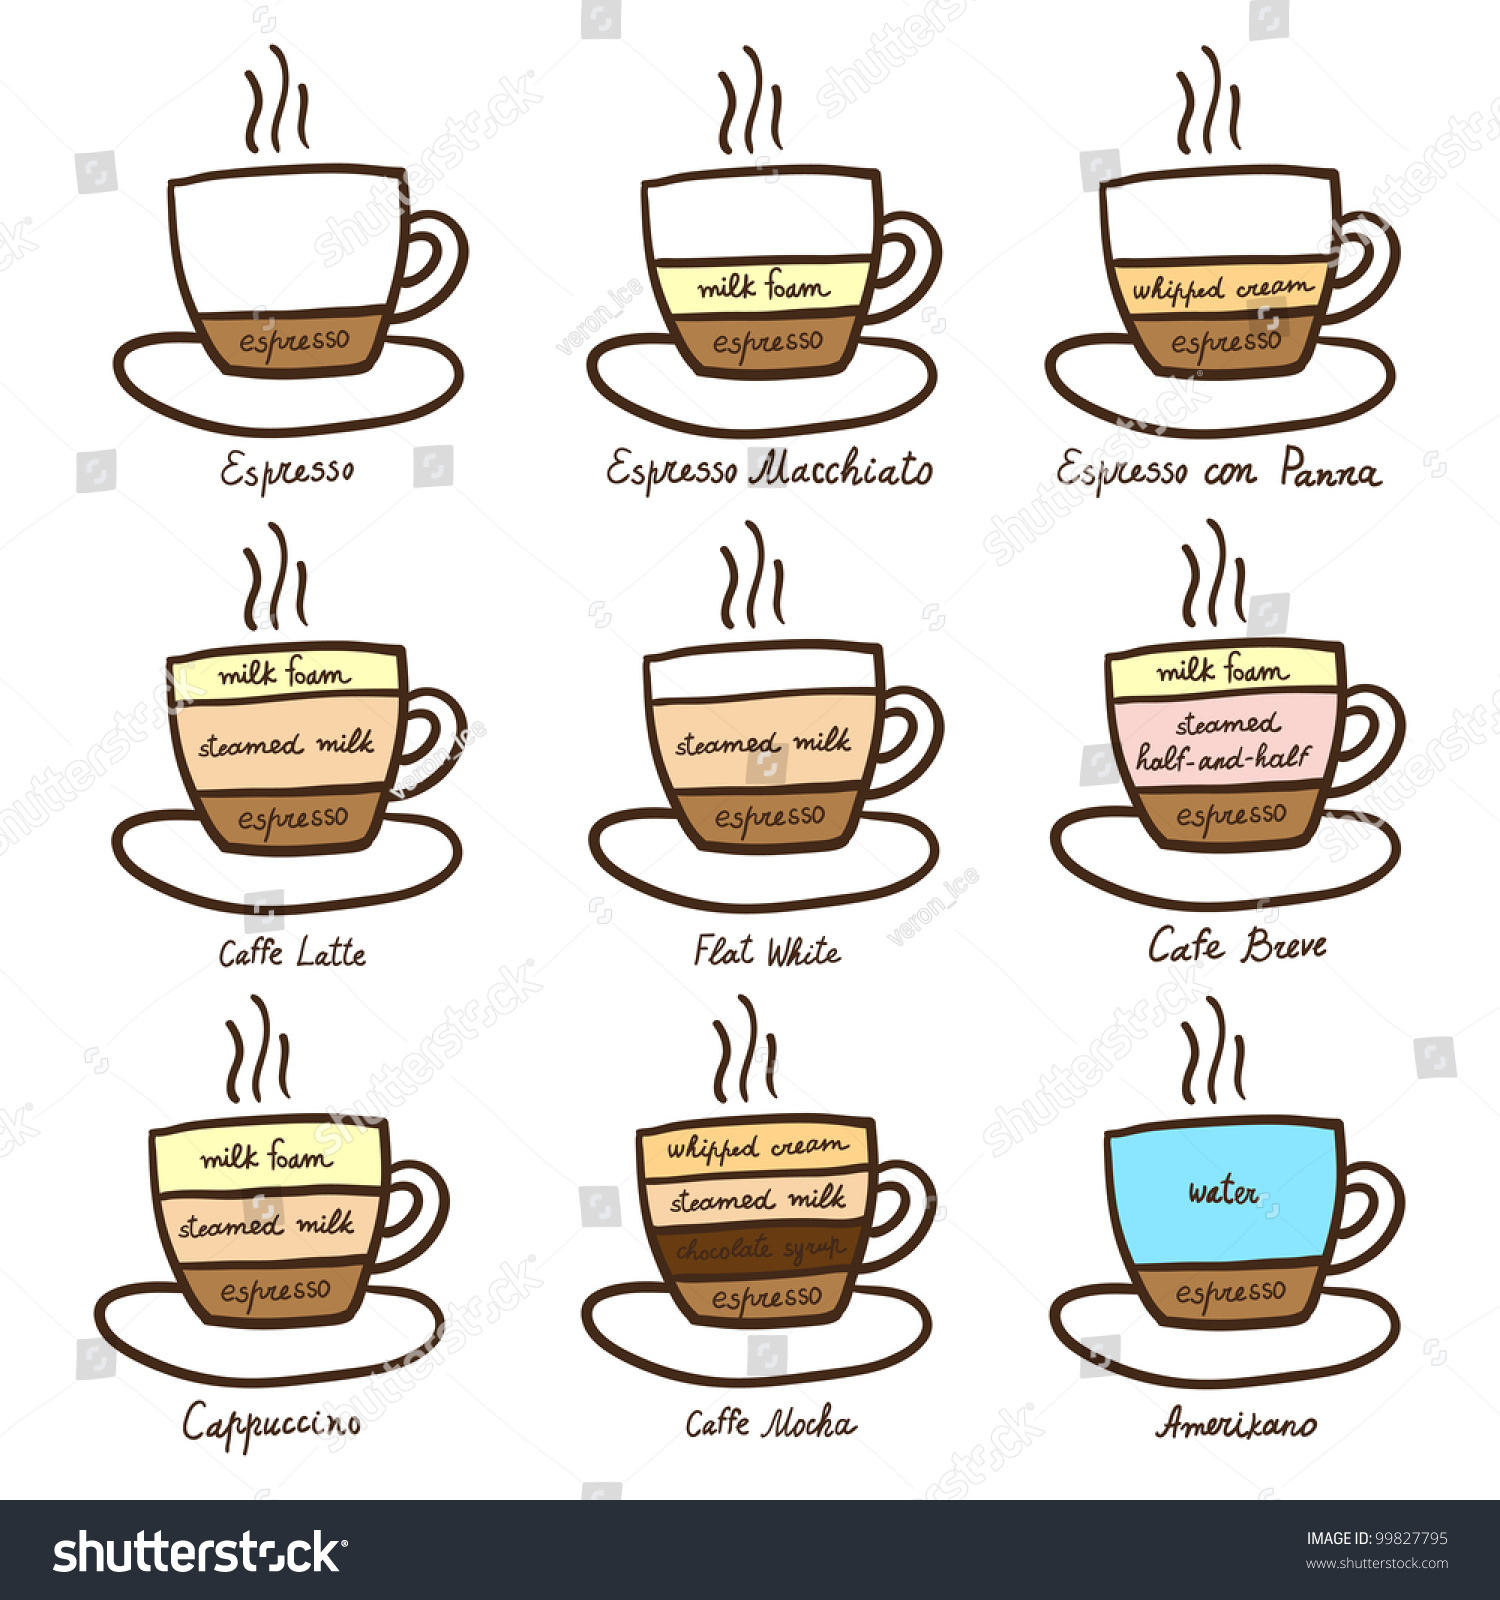 Diagram Types Of Coffee Stock Vector Illustration 99827795 : Shutterstock